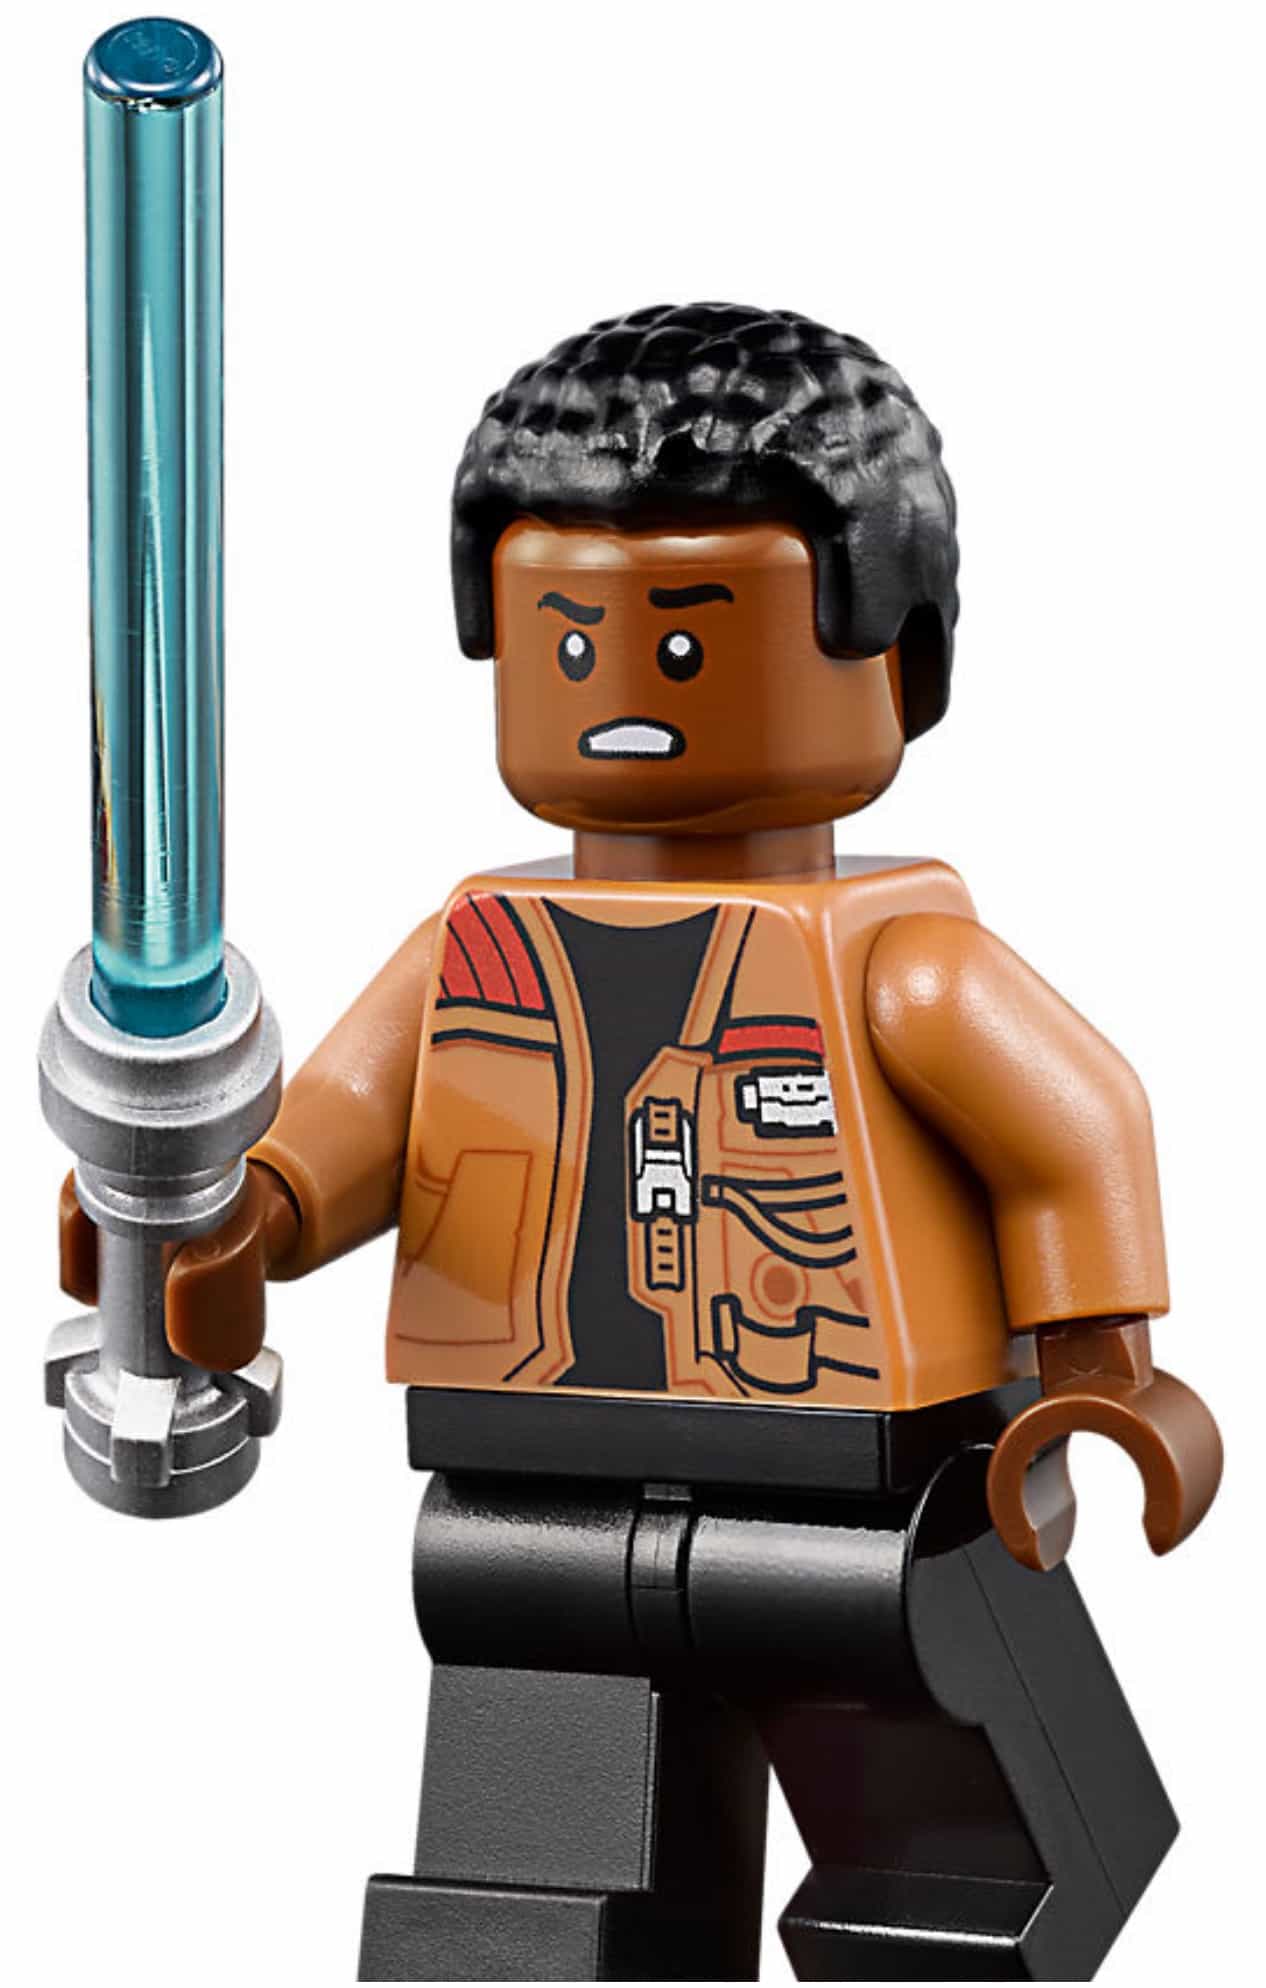 Finn Lego Star Wars Minifigures blue legs version